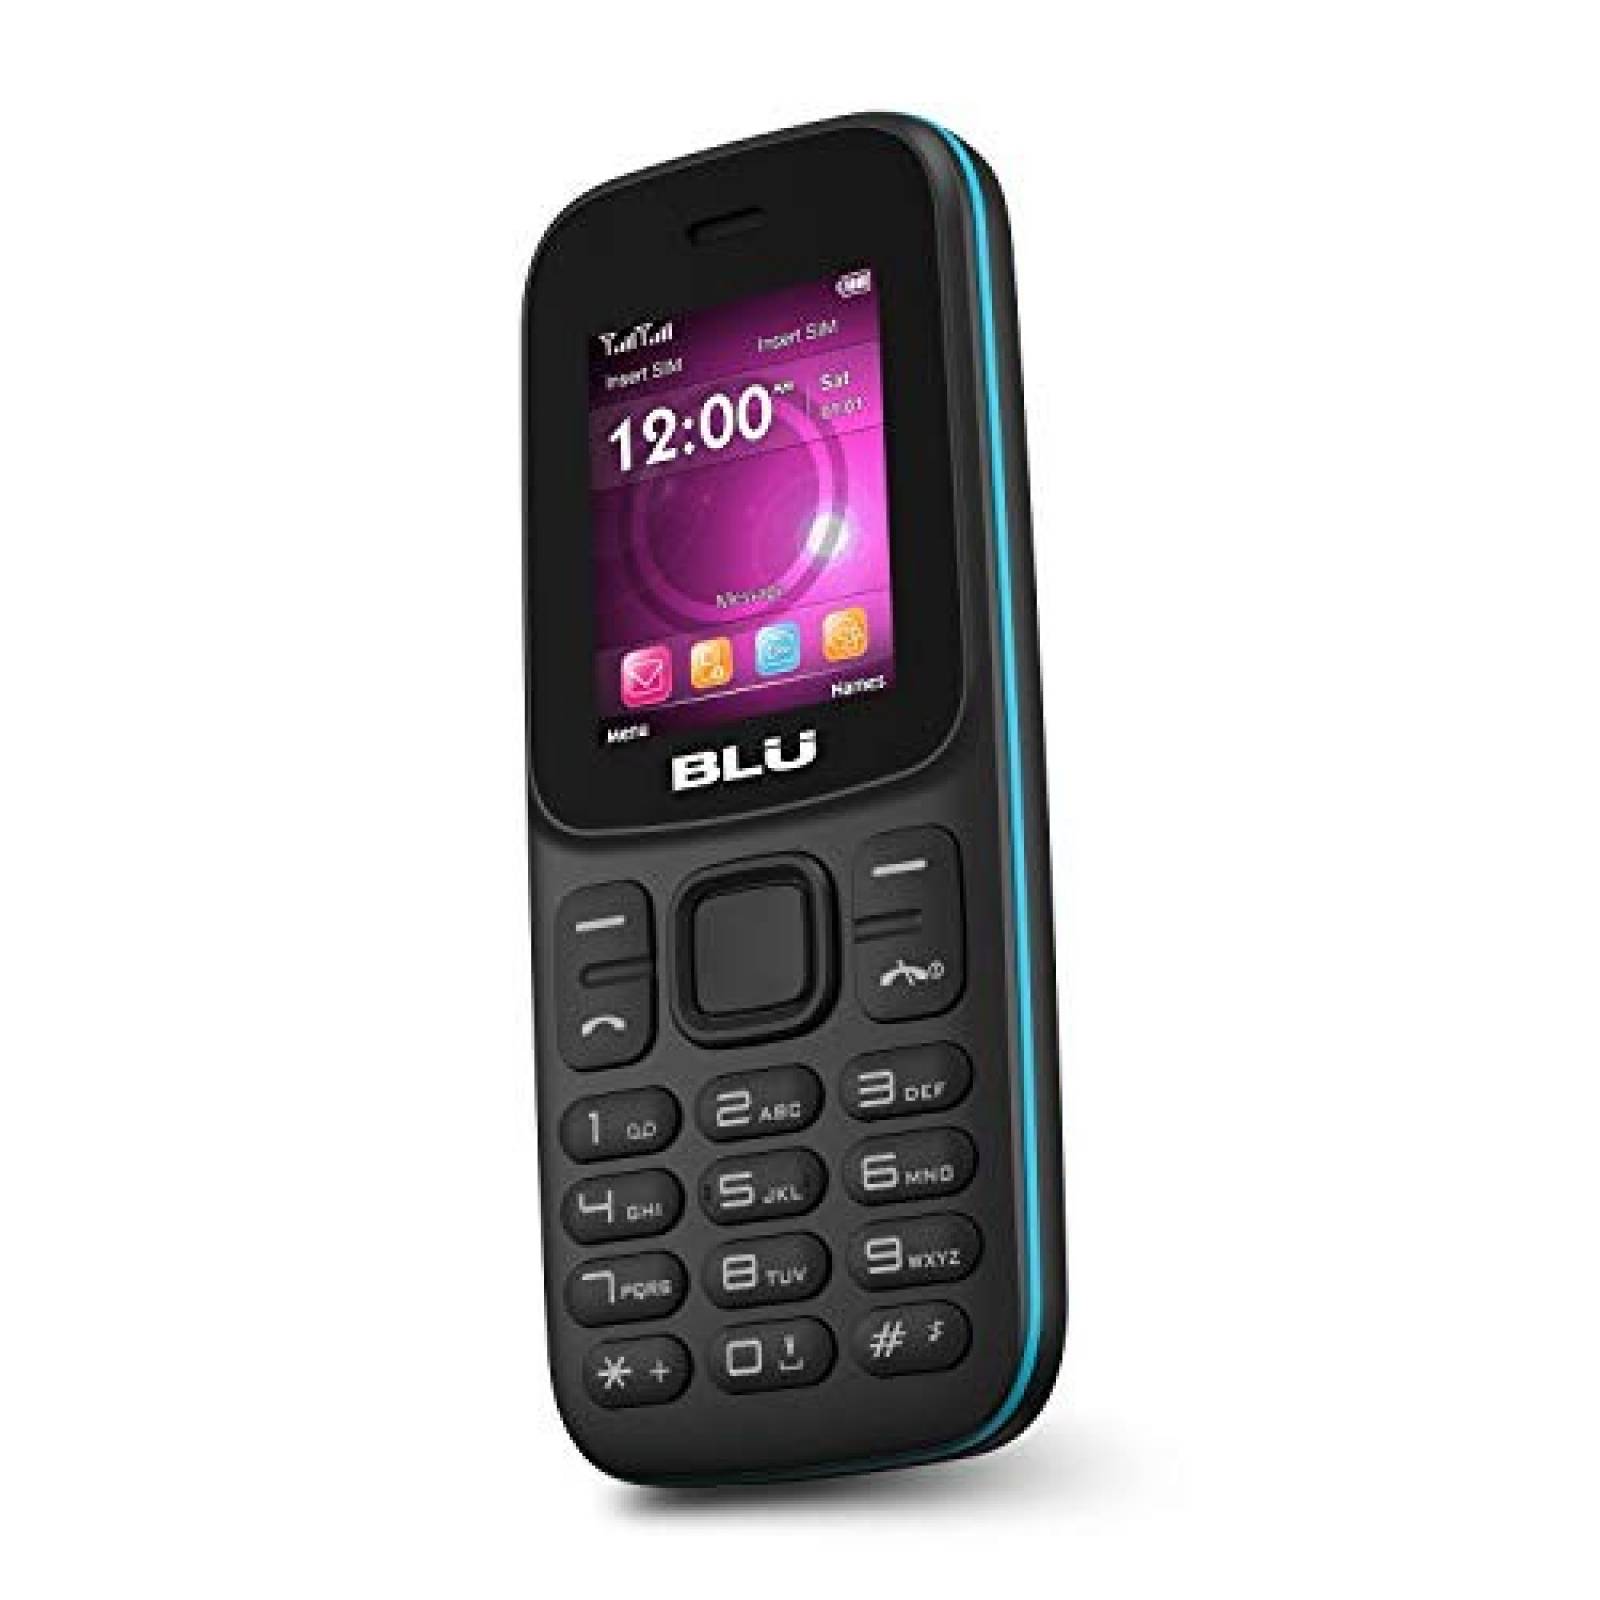 Teléfono celular BLU Z5 32MB GSM desbloqueado -Negro